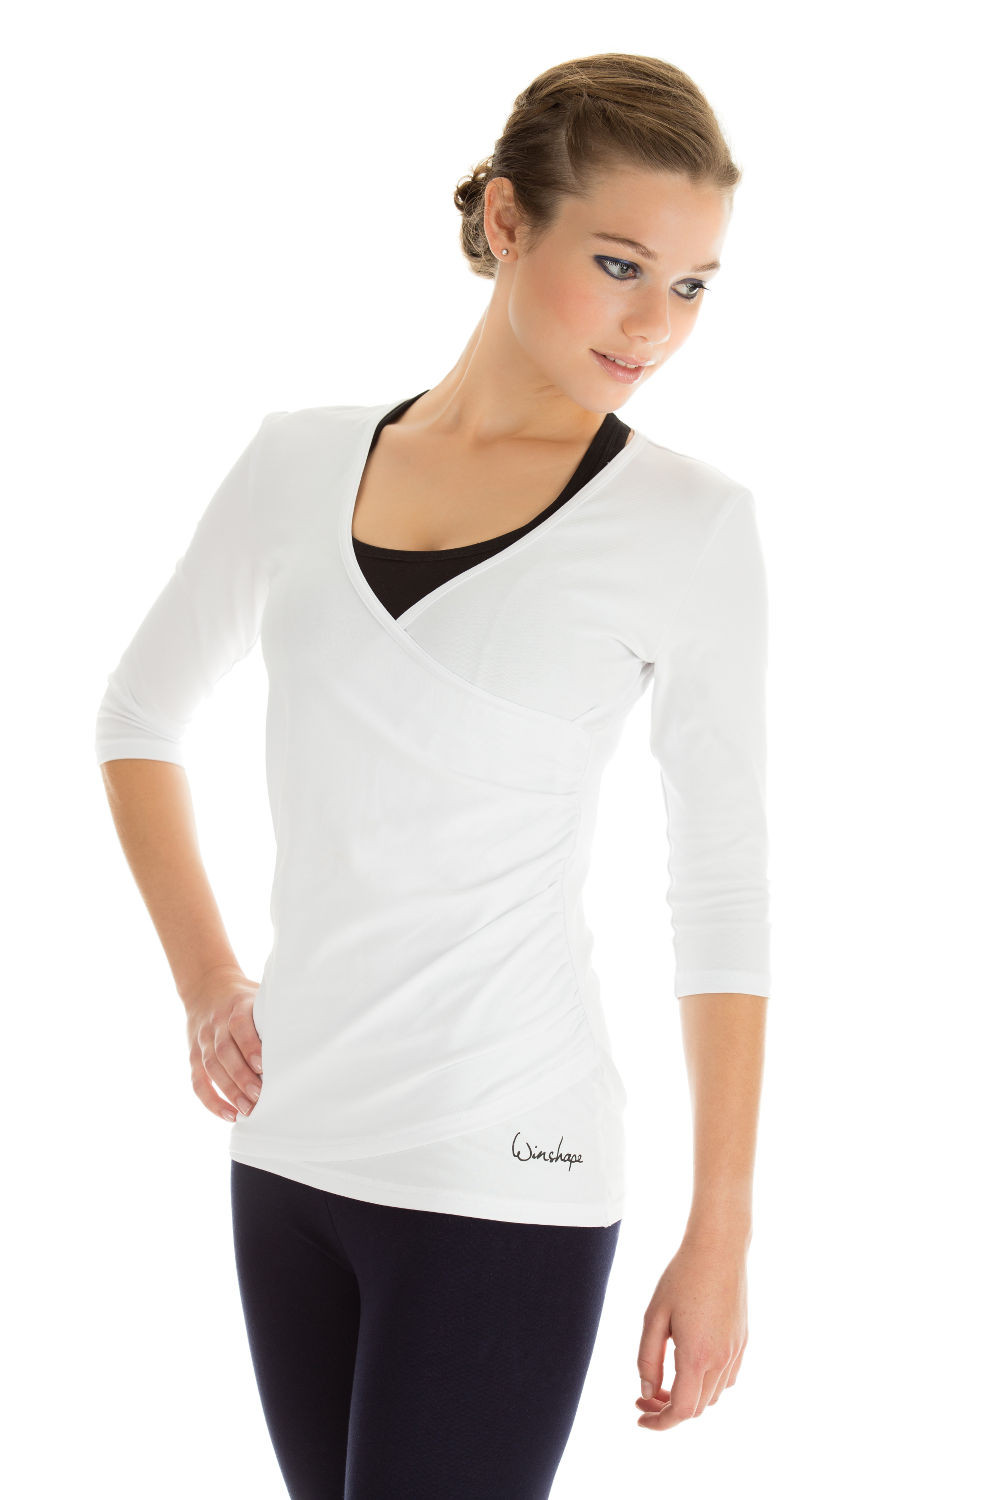 ¾-Arm Shirt Winshape WS3, in weiß, Style Flow Wickeloptik